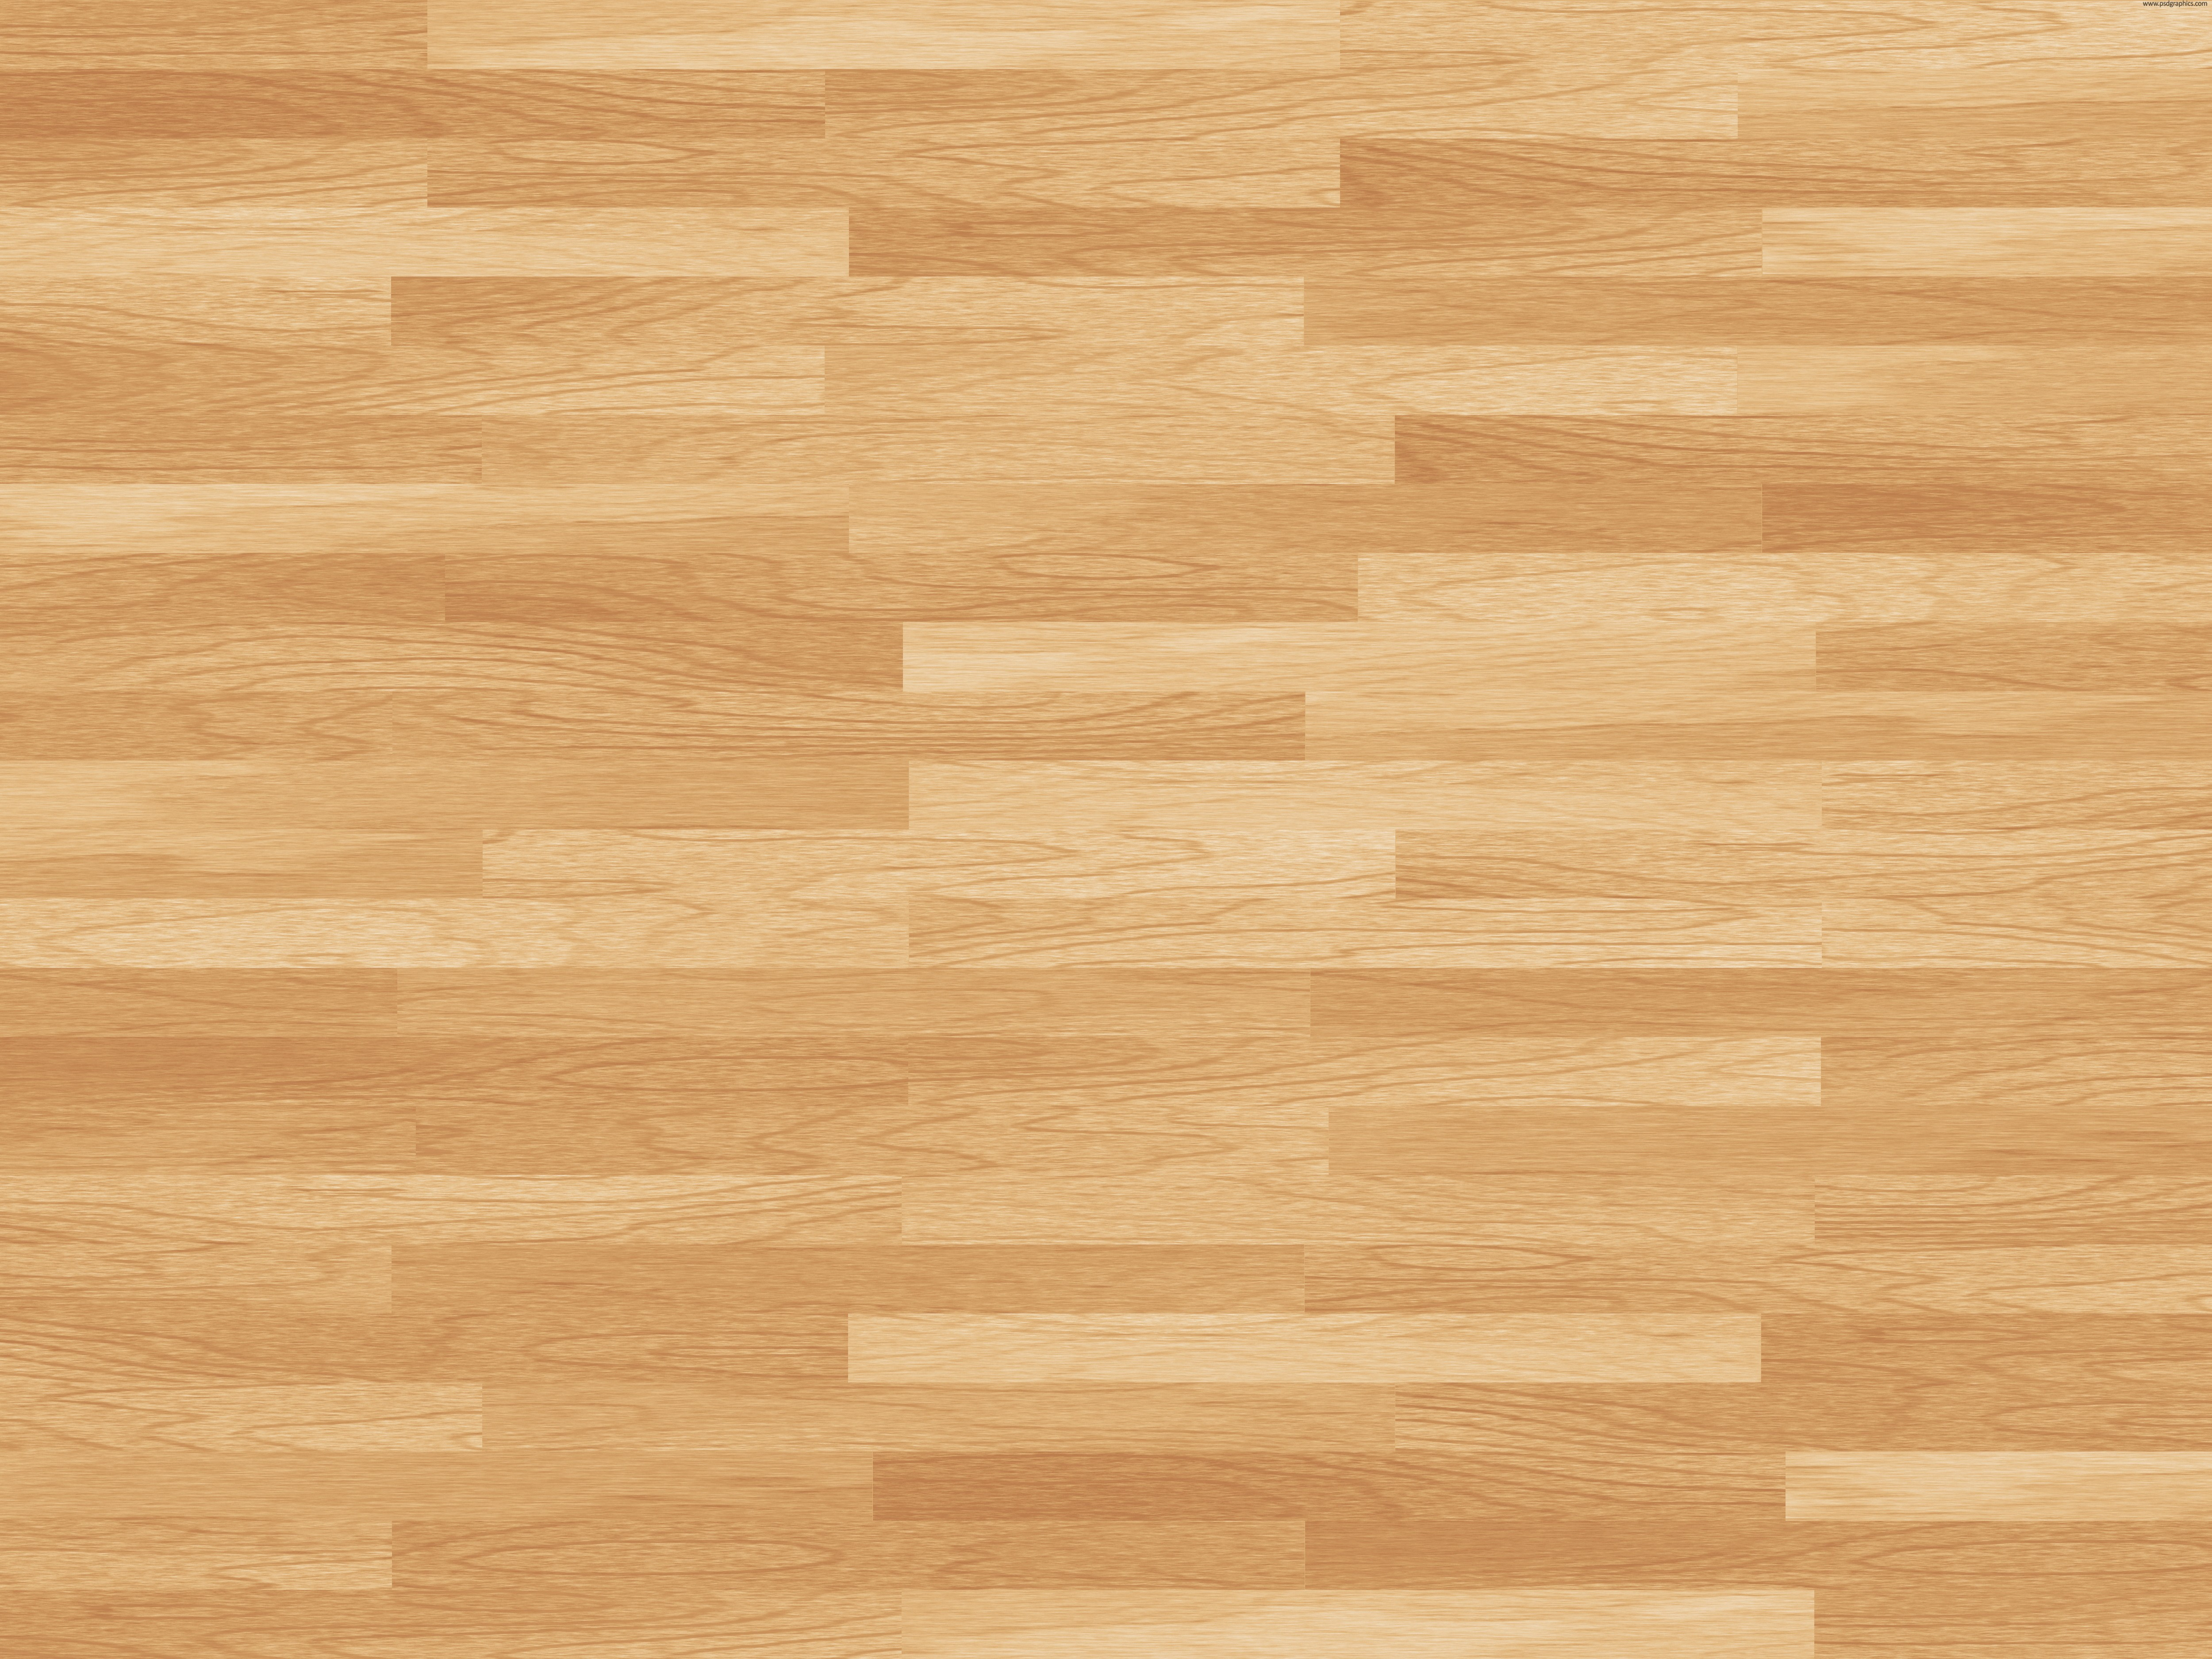 19 Amazing Hardwood Floor Care 2024 free download hardwood floor care of hardwood floor patterns lovely hardwood background hd home design idea for hardwood floor patterns lovely hardwood background hd